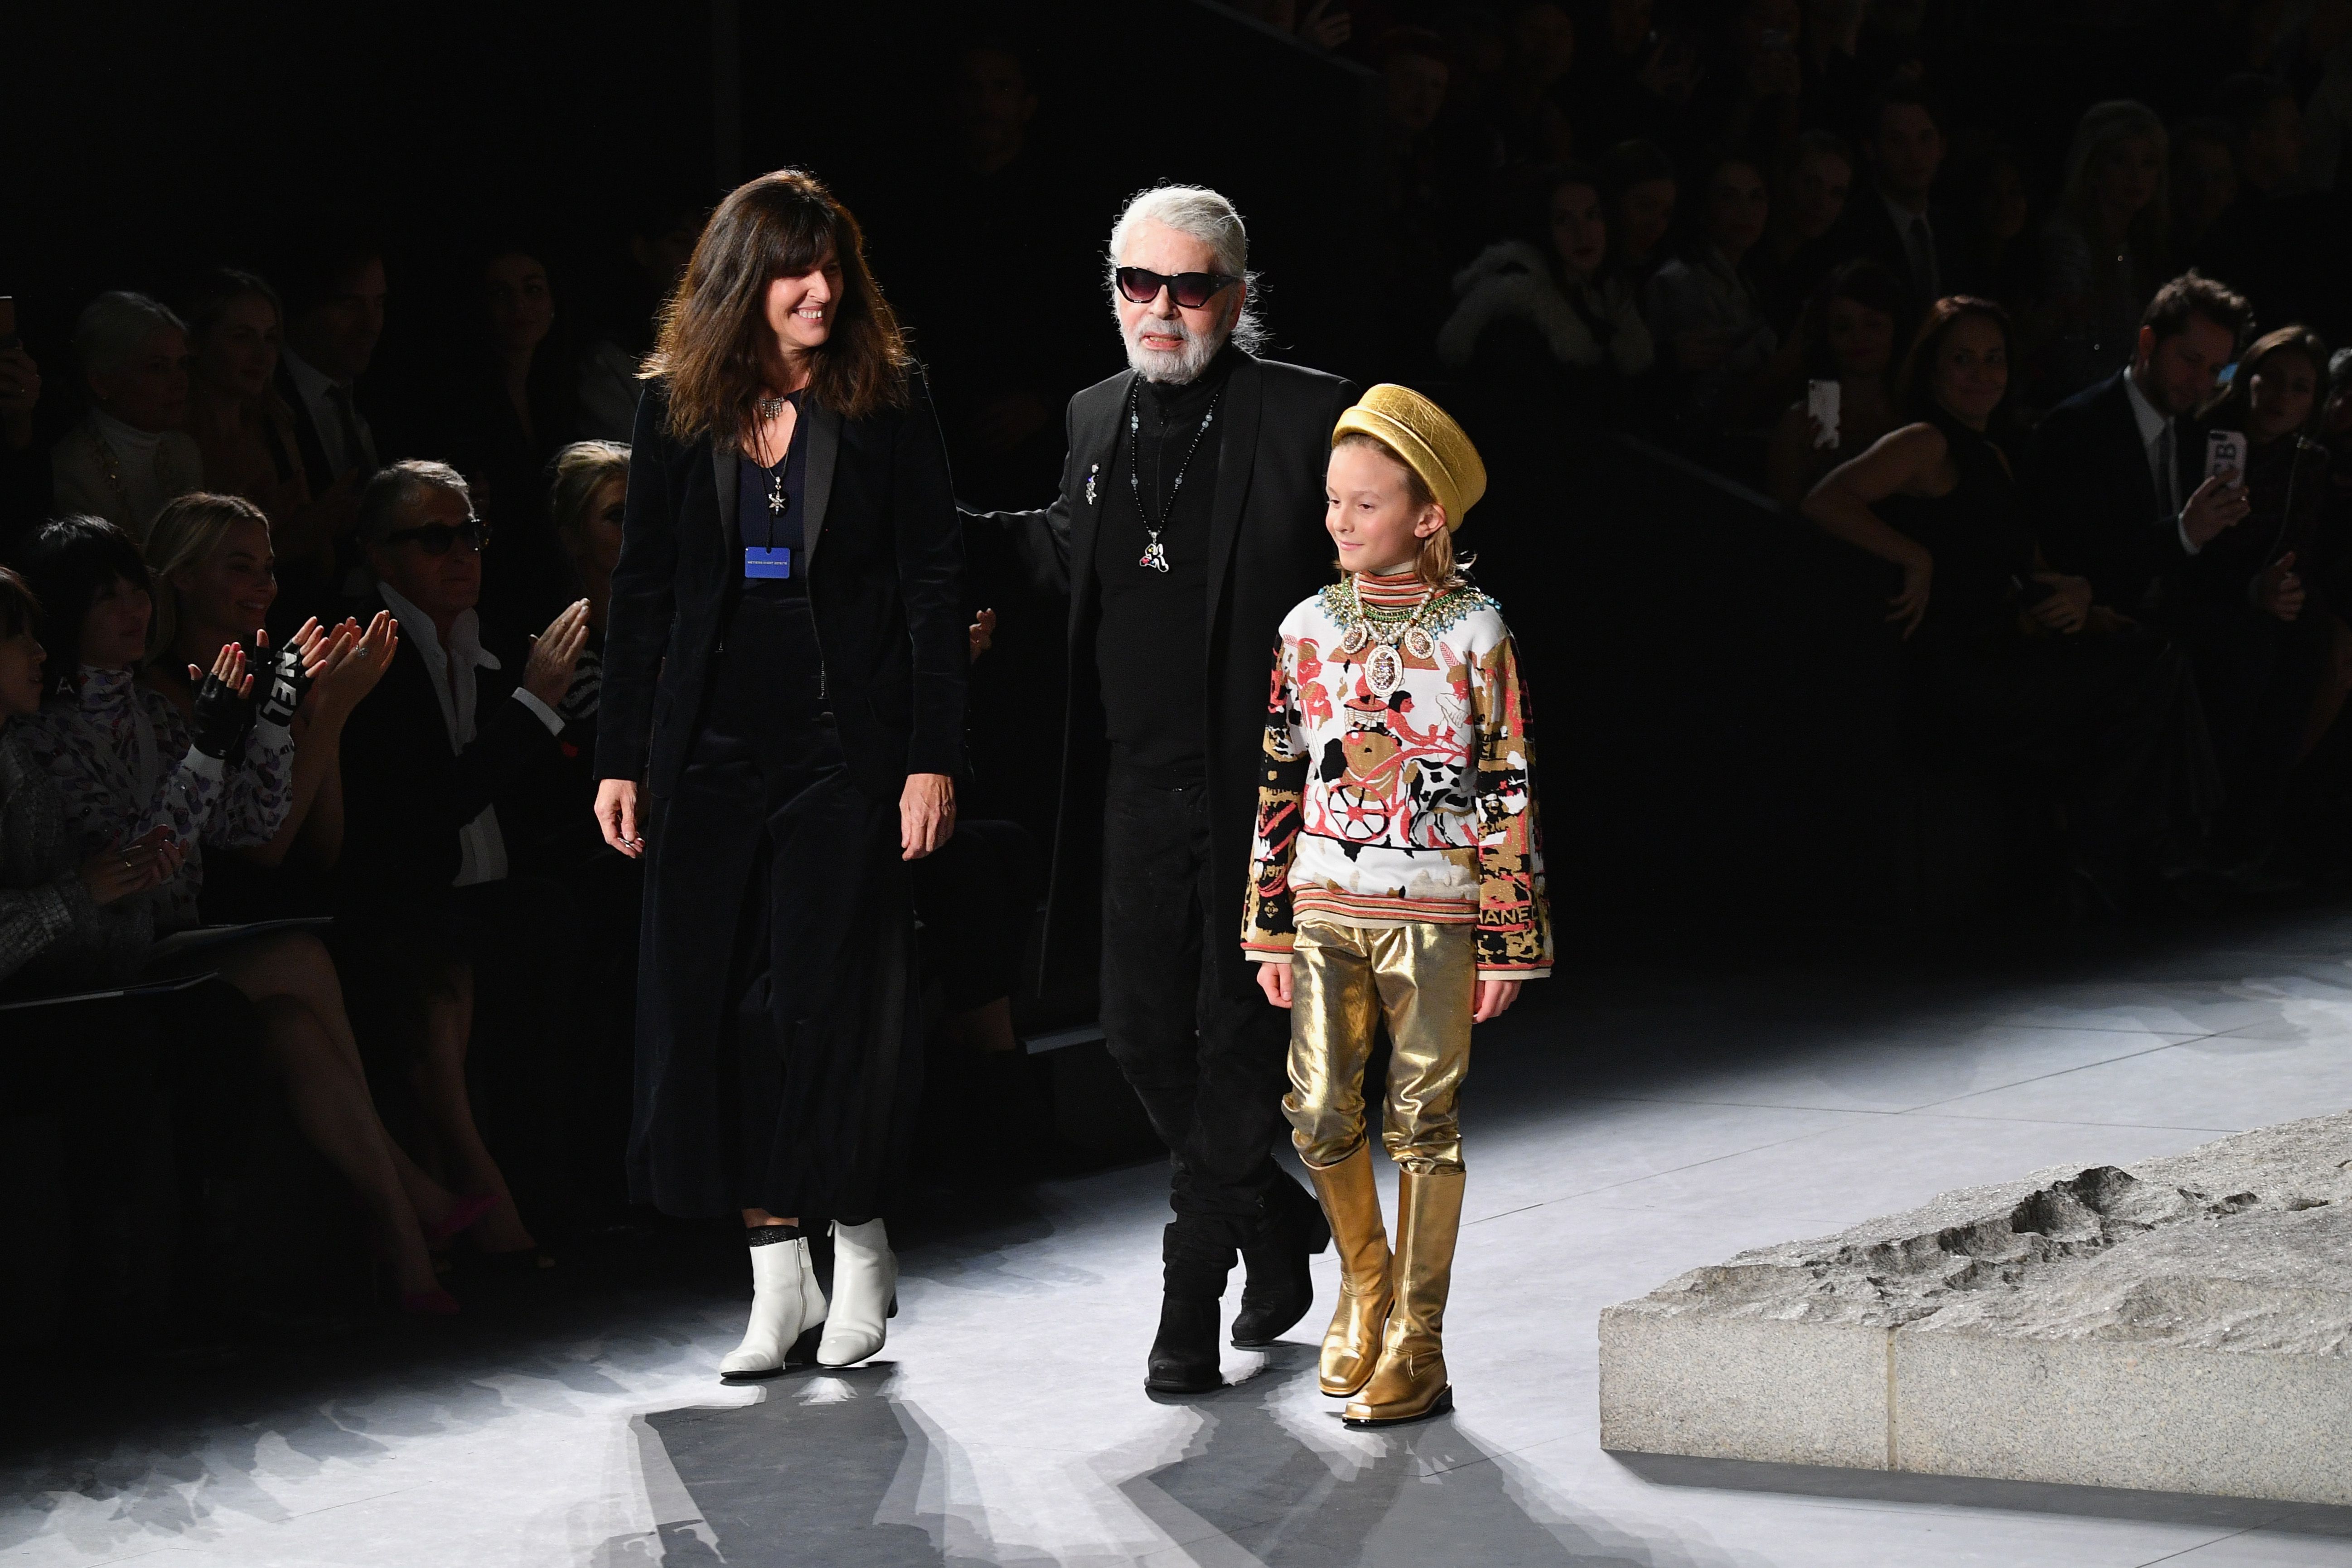 Fashion designer Karl Lagerfeld, who helped grow Chanel brand, has